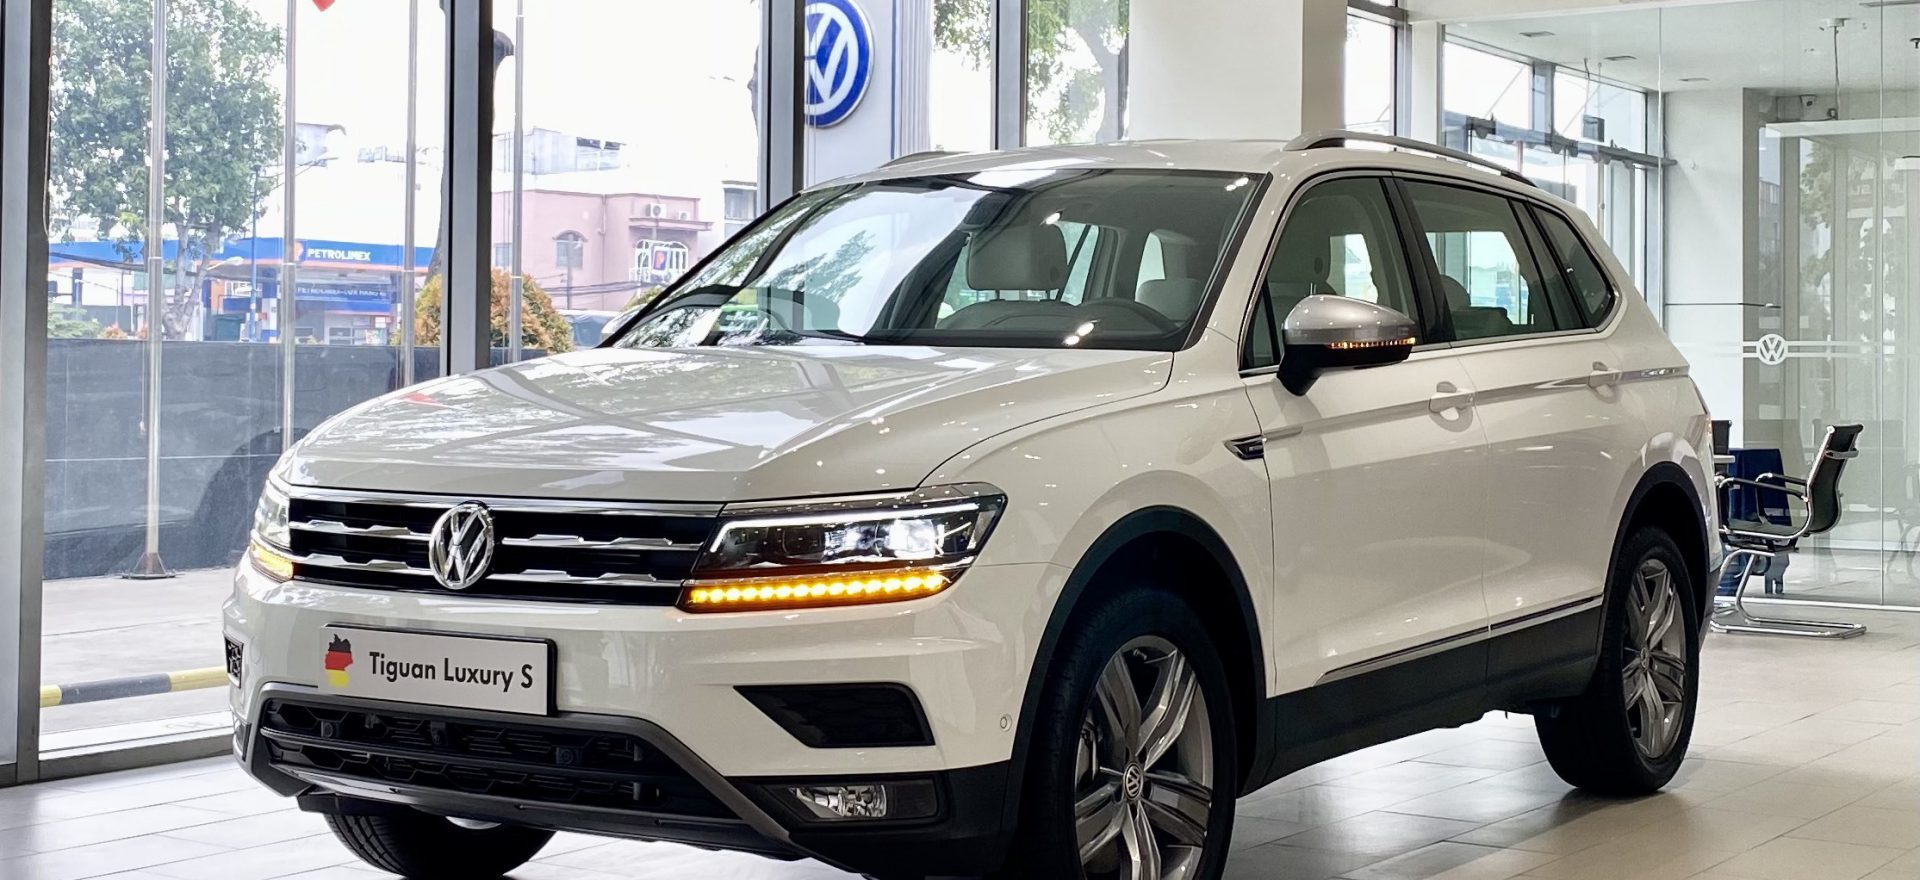 Tiguan luxury s trang  2021 - Volkswagen Sai Gon